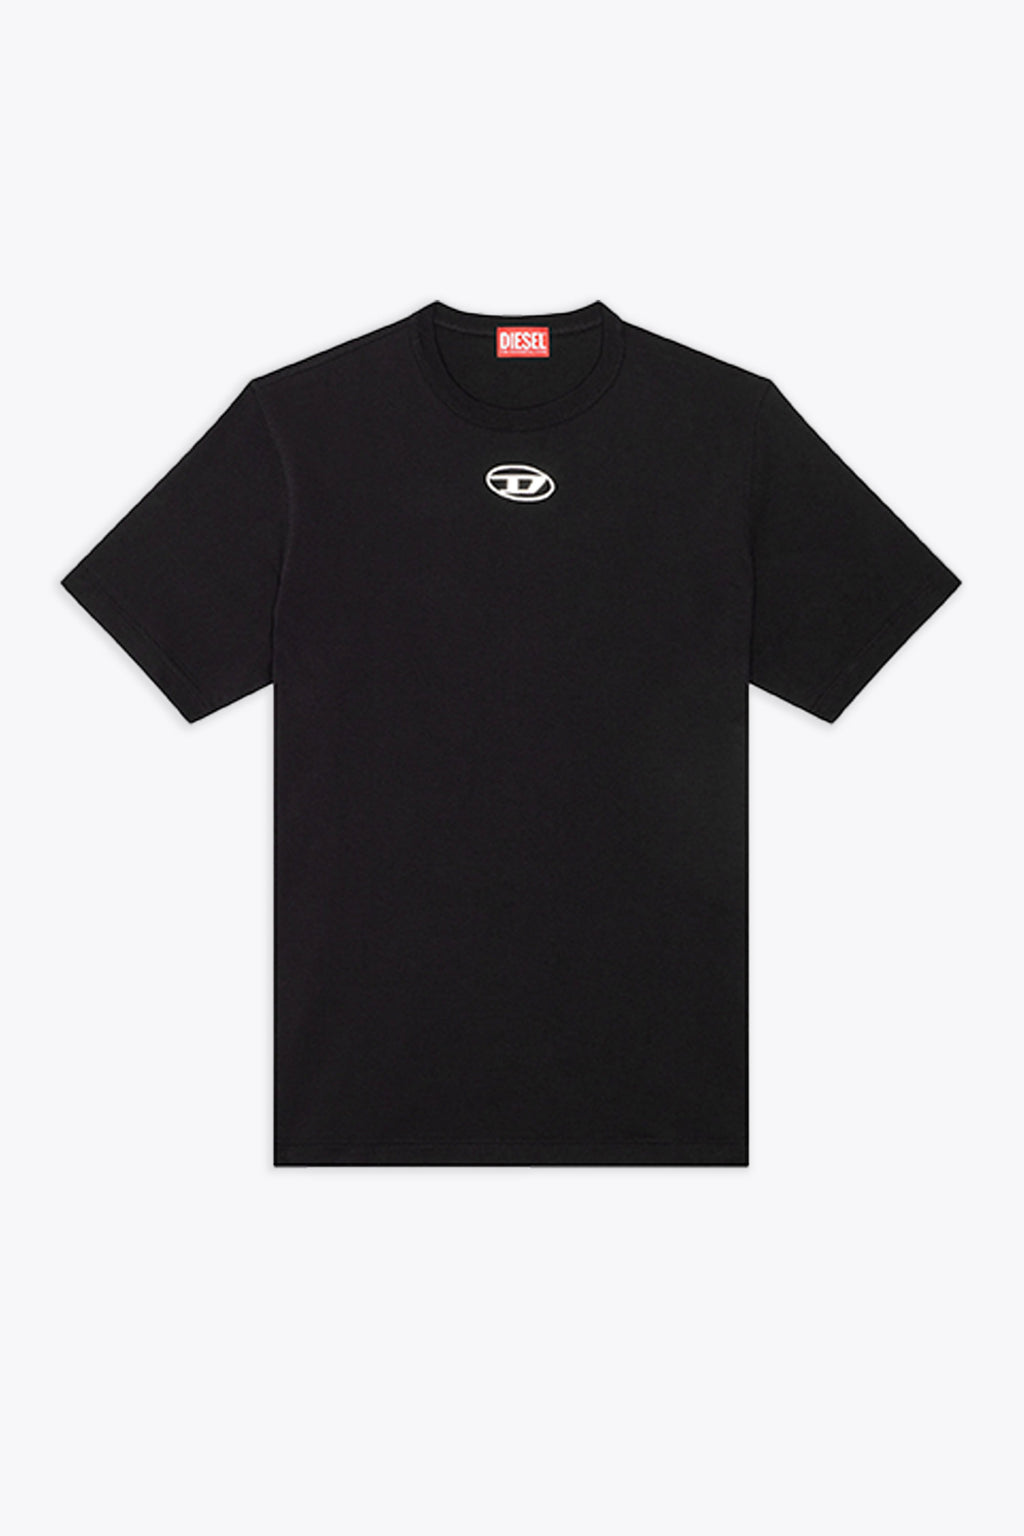 alt-image__Black-cotton-t-shirt-with-Oval-D-rubber-logo---T-Just-Od